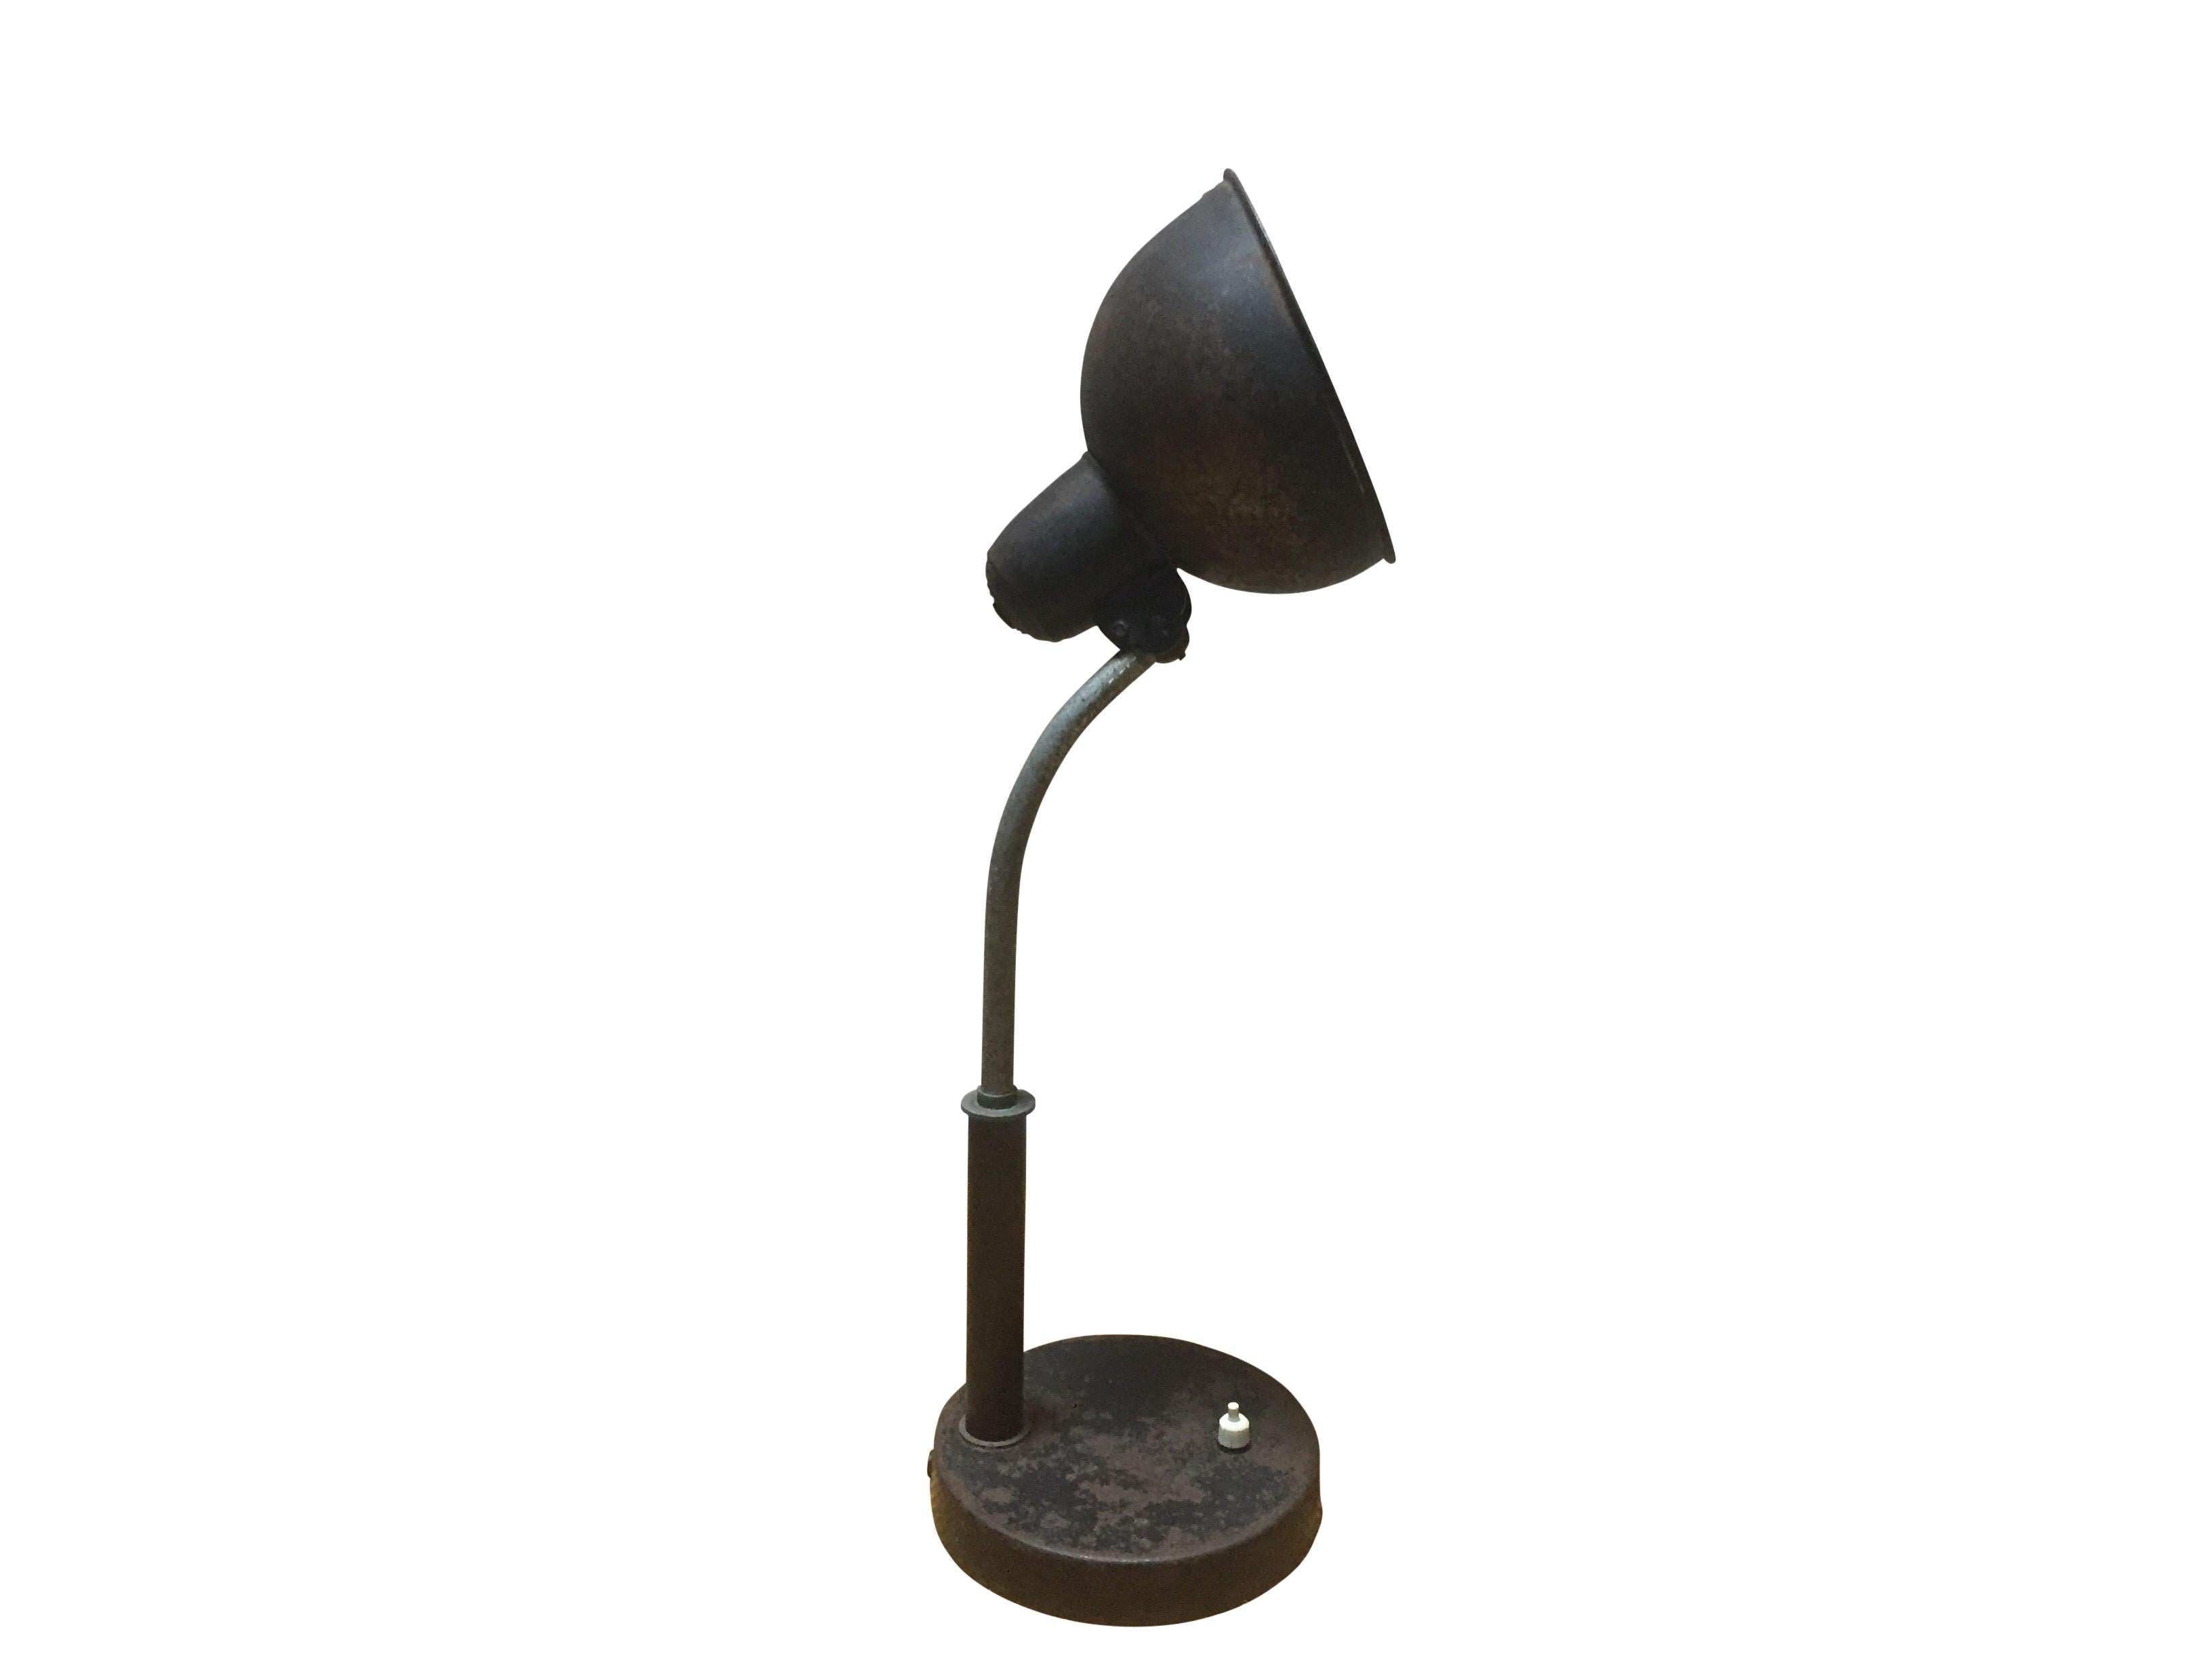 German Christian Dell Original Black Metal Table Lamp by Idell Kaiser, 1930s Bauhaus For Sale